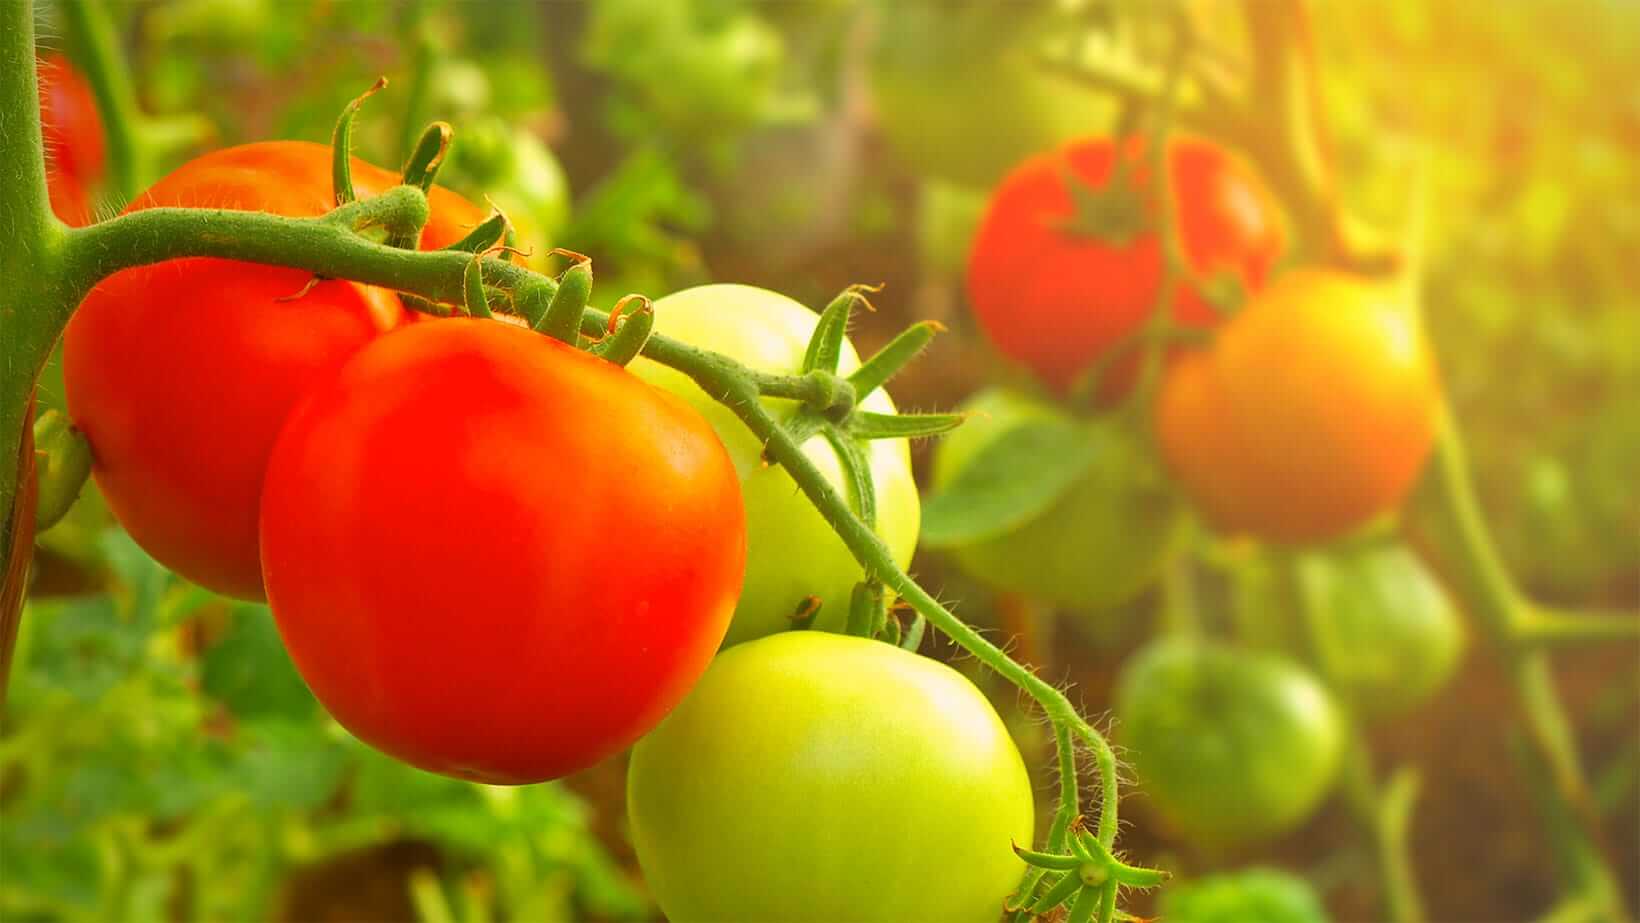 Screen-Free Benefit of Growing Your Veggies